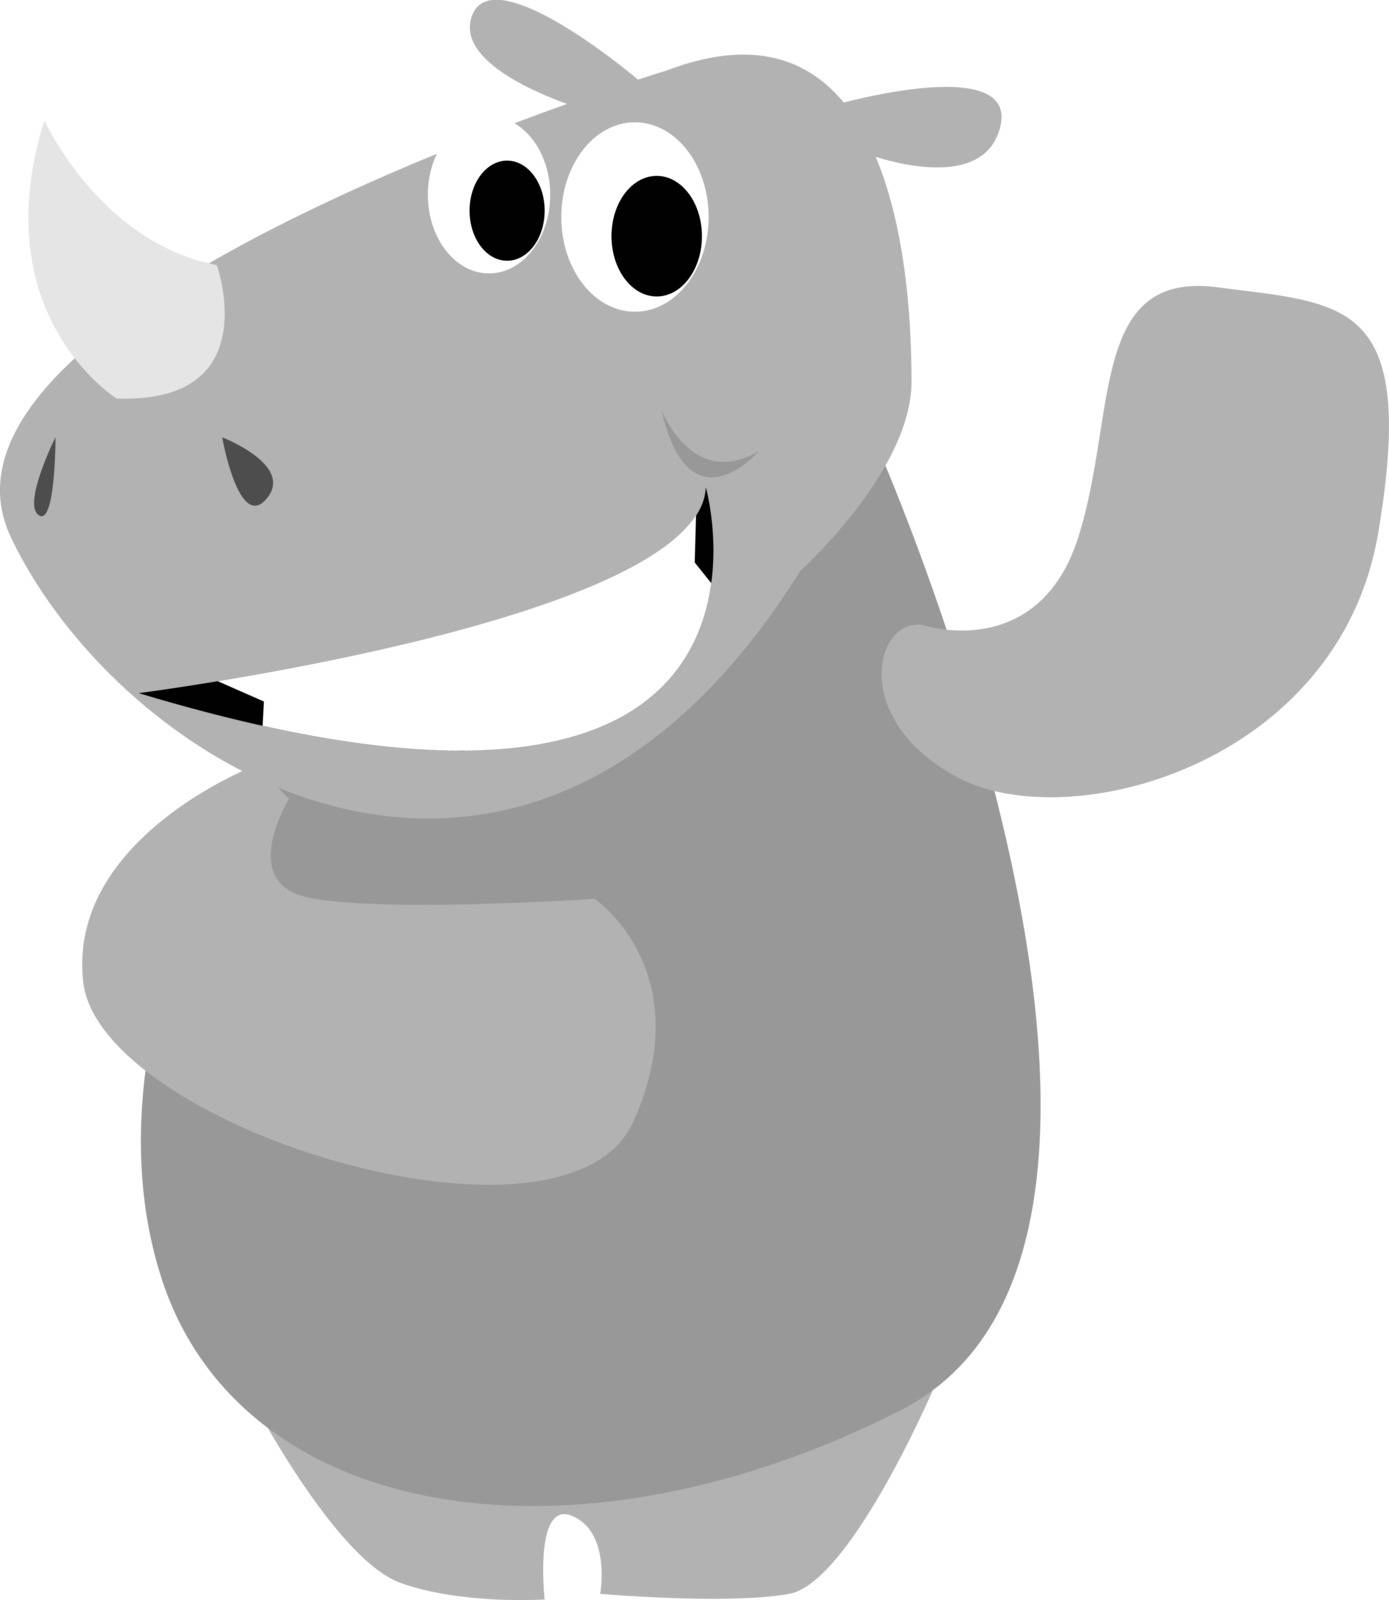 Happy rhino, illustration, vector on white background.